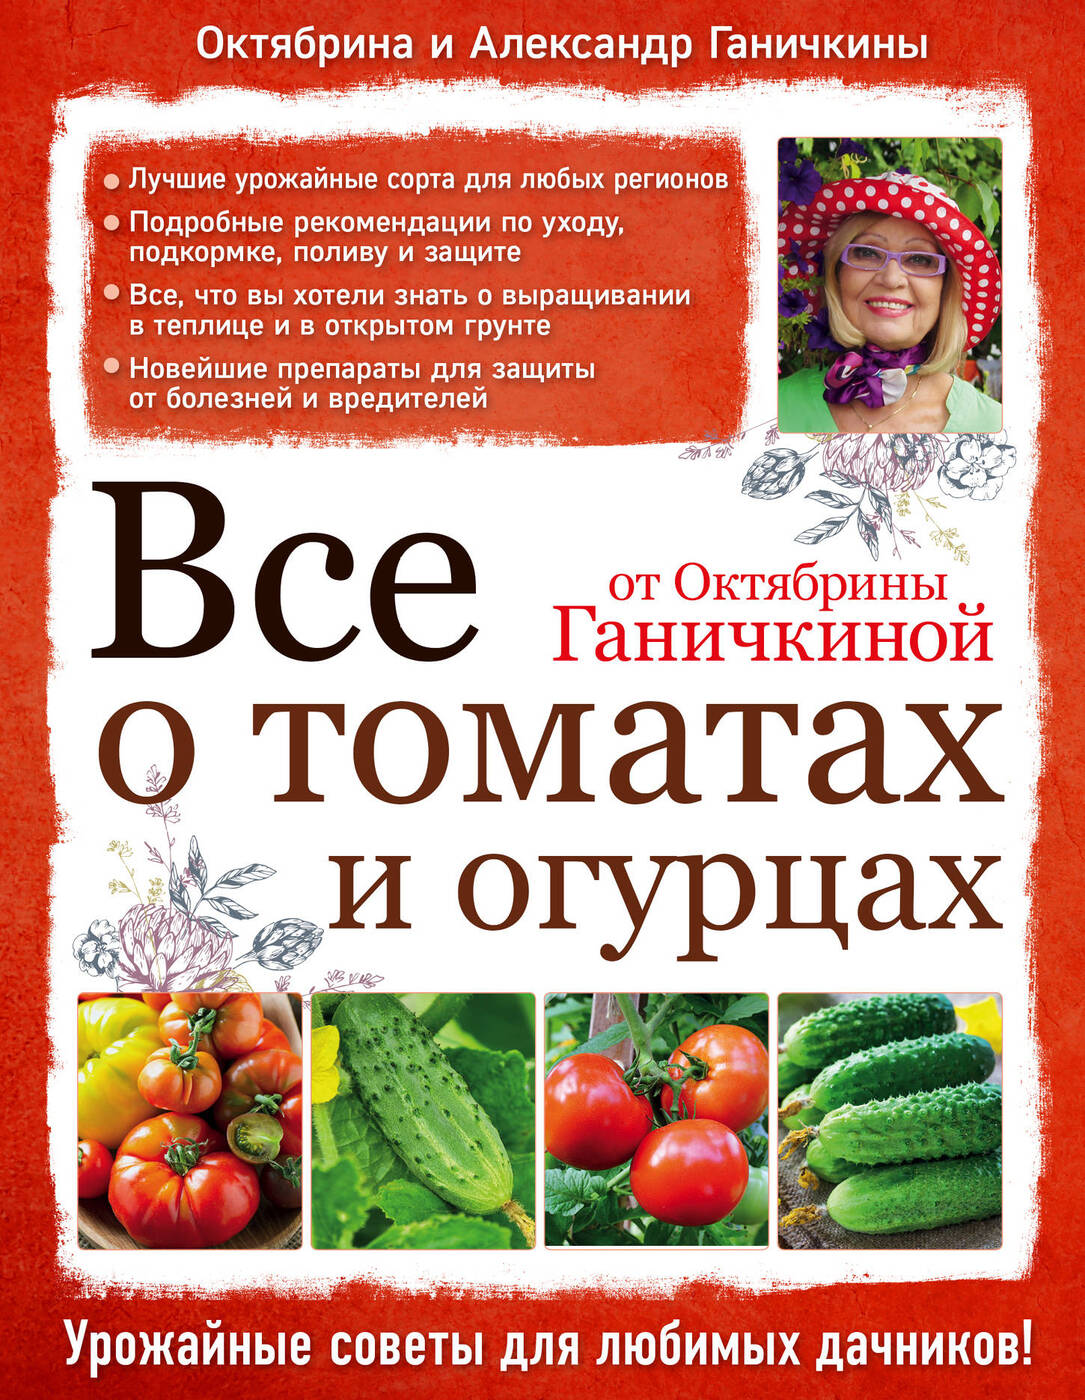 Октябрина Ганичкина сад и огород томаты